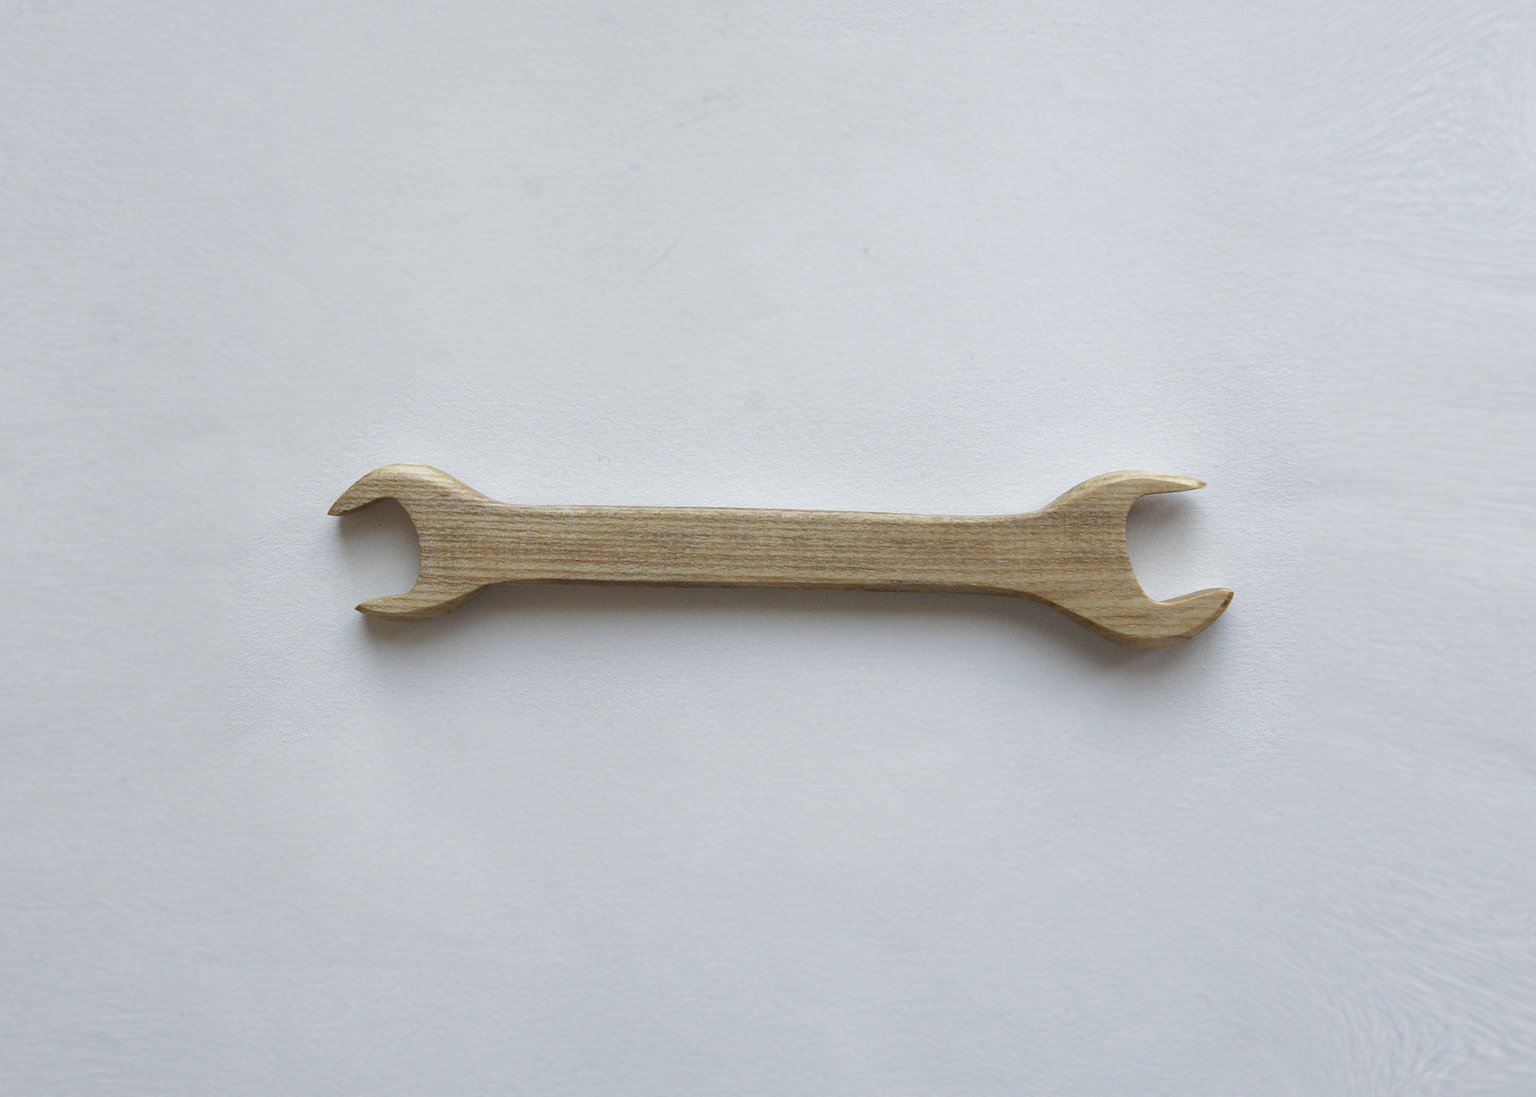 Handmade wooden wrench